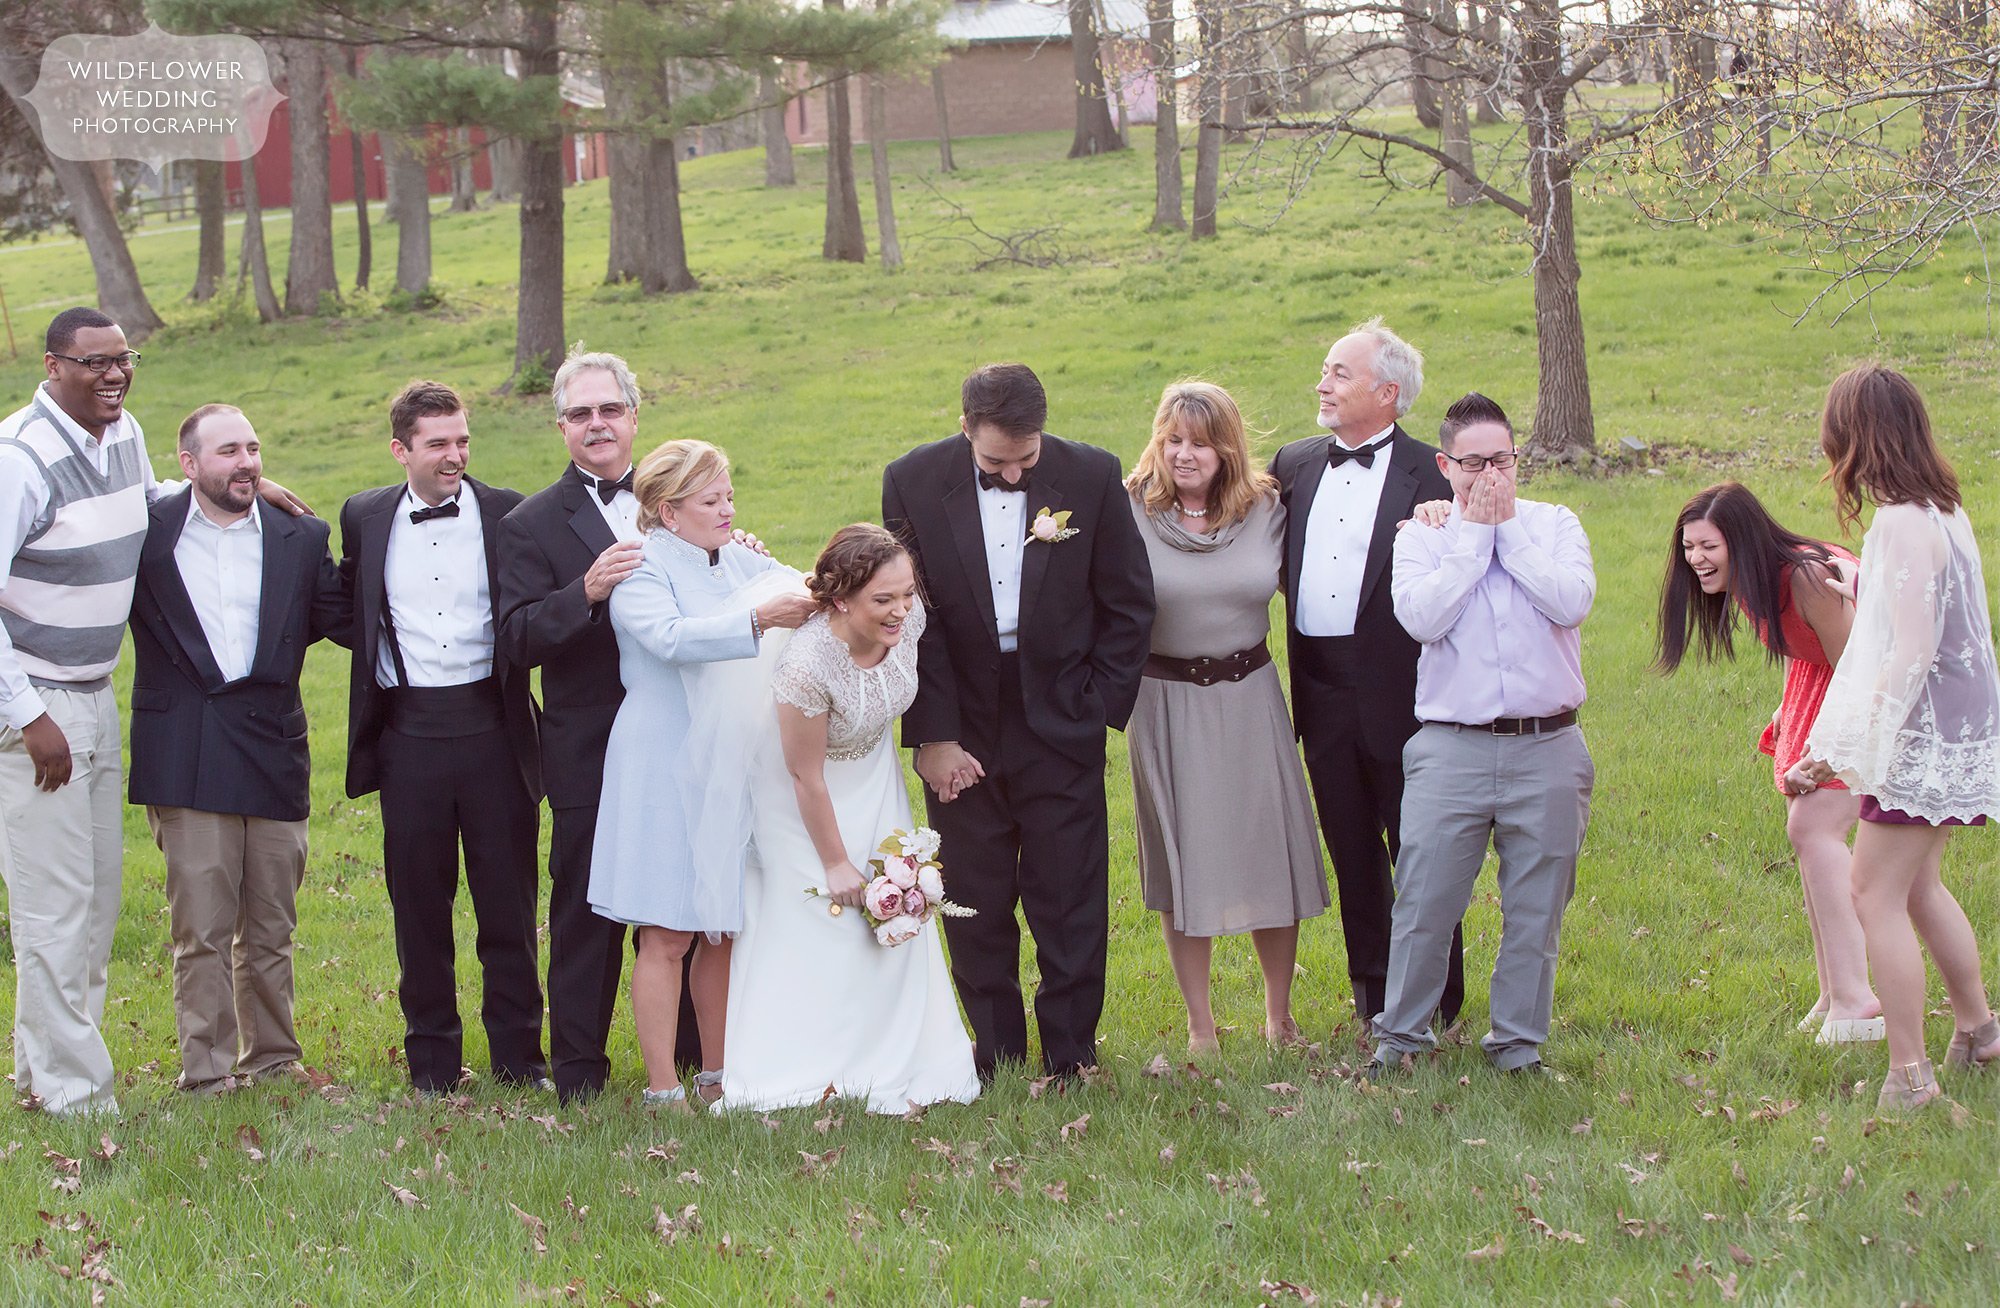 Hilarious family wedding photo at Nifong Park in Columbia, MO.